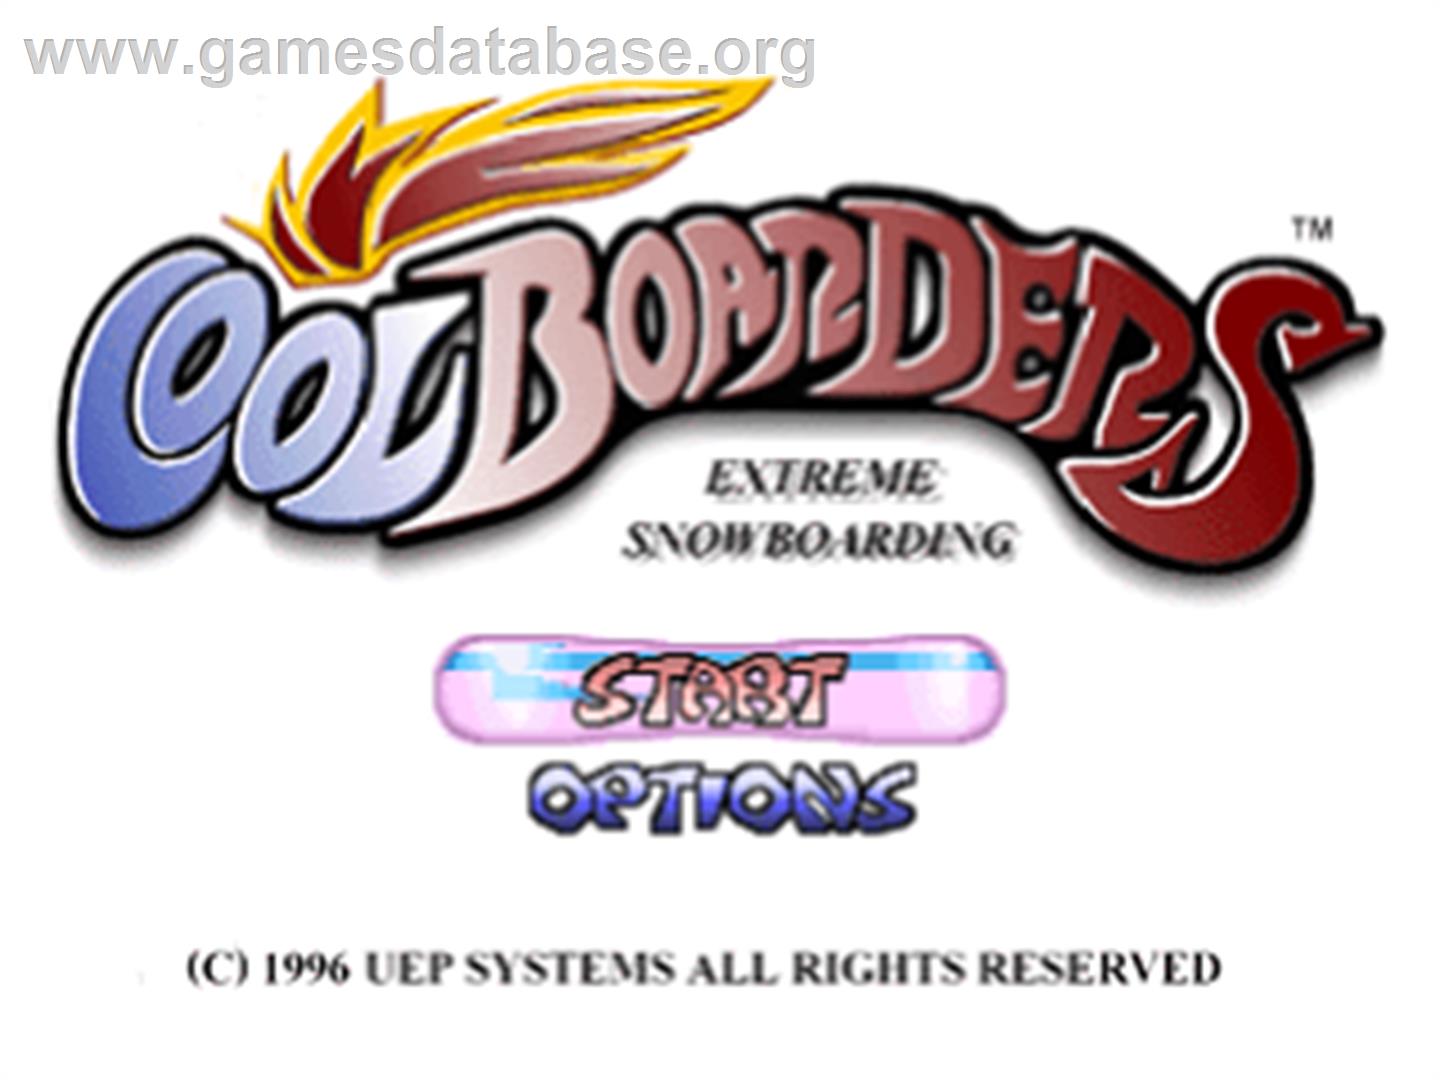 Cool Boarders - Sony Playstation - Artwork - Title Screen